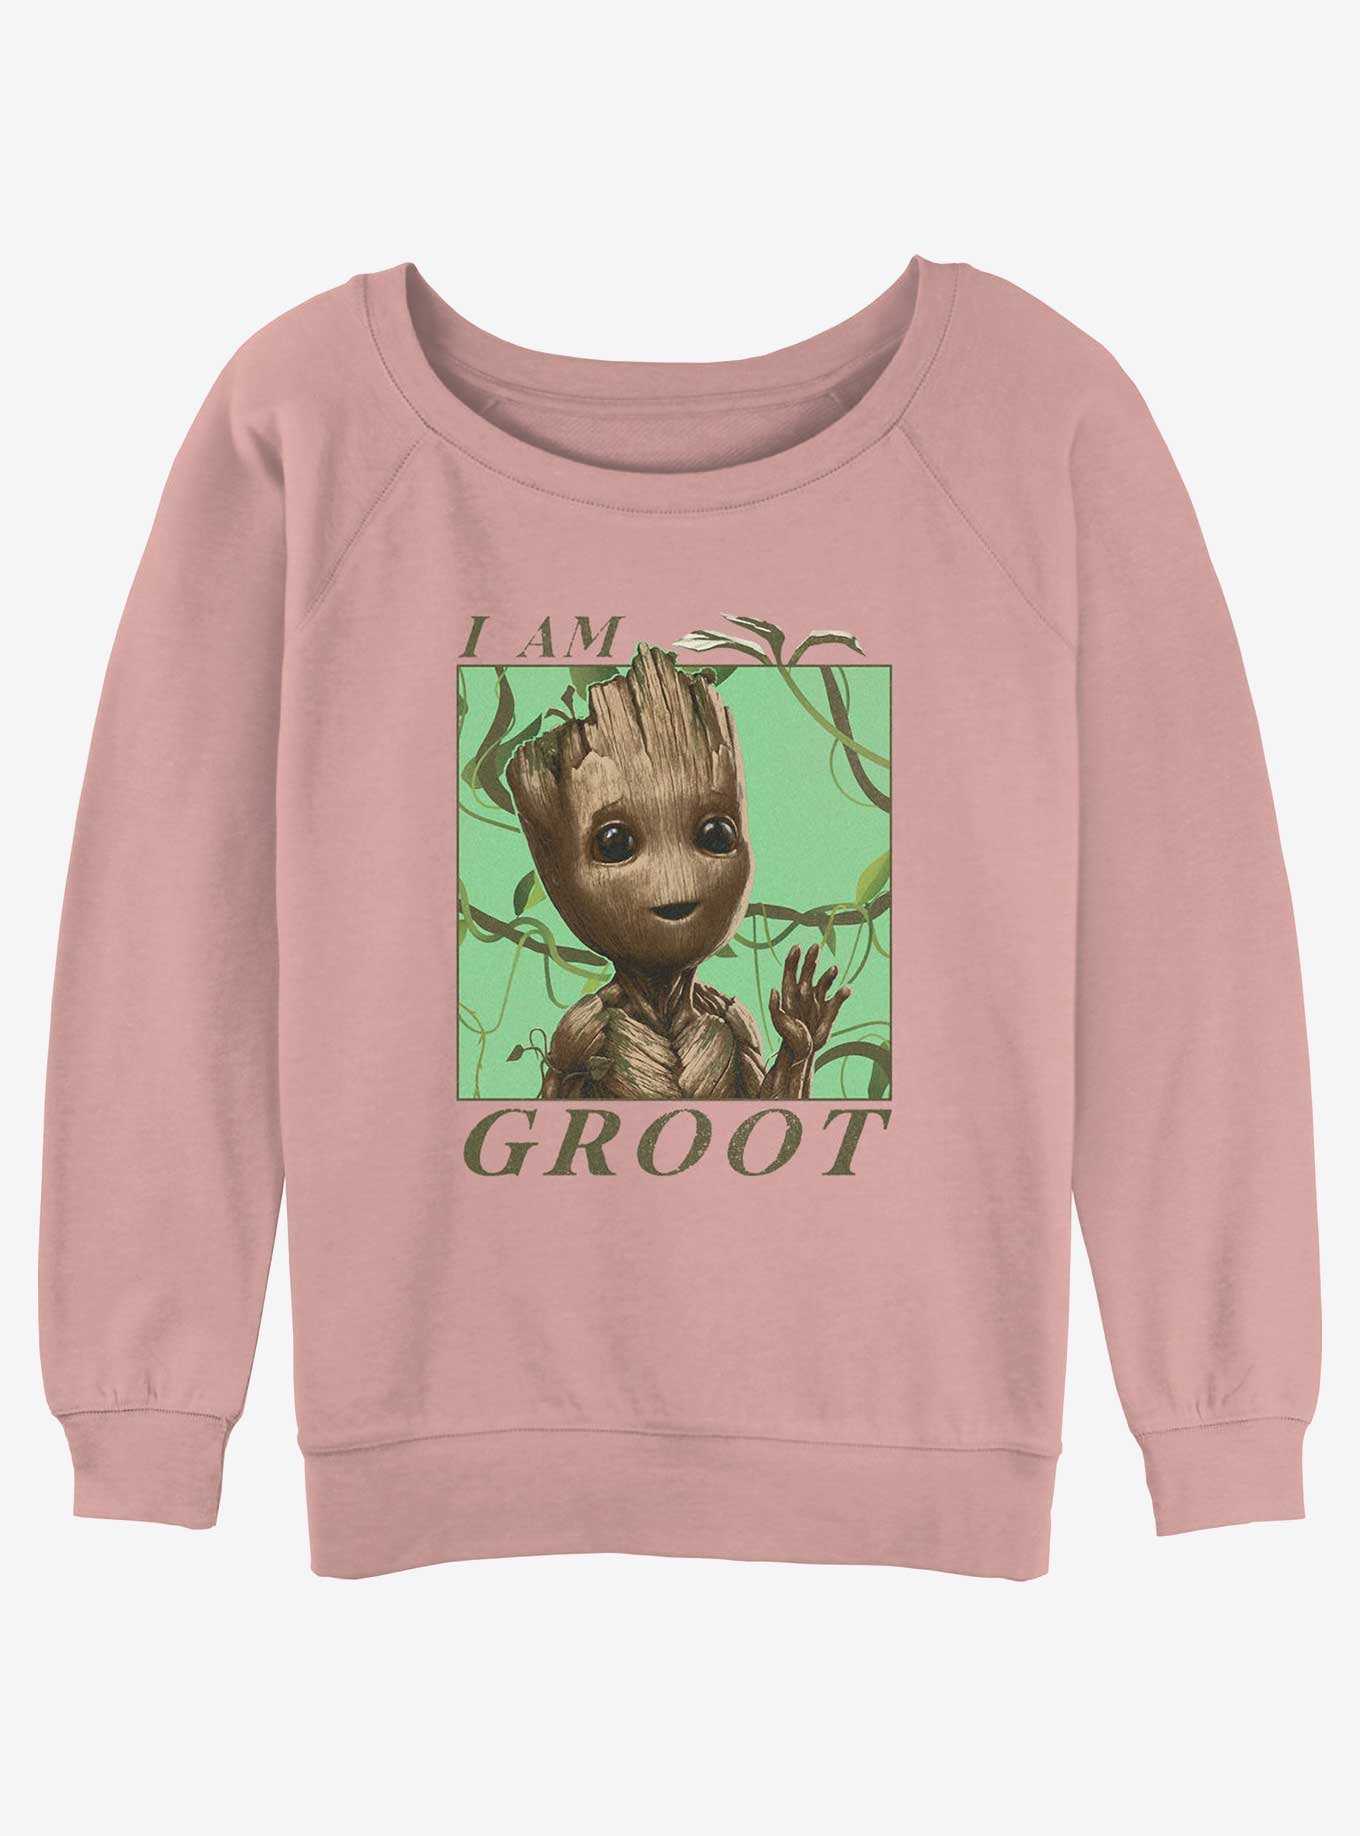 Marvel Guardians of the Galaxy Groot Vines Girls Slouchy Sweatshirt, , hi-res